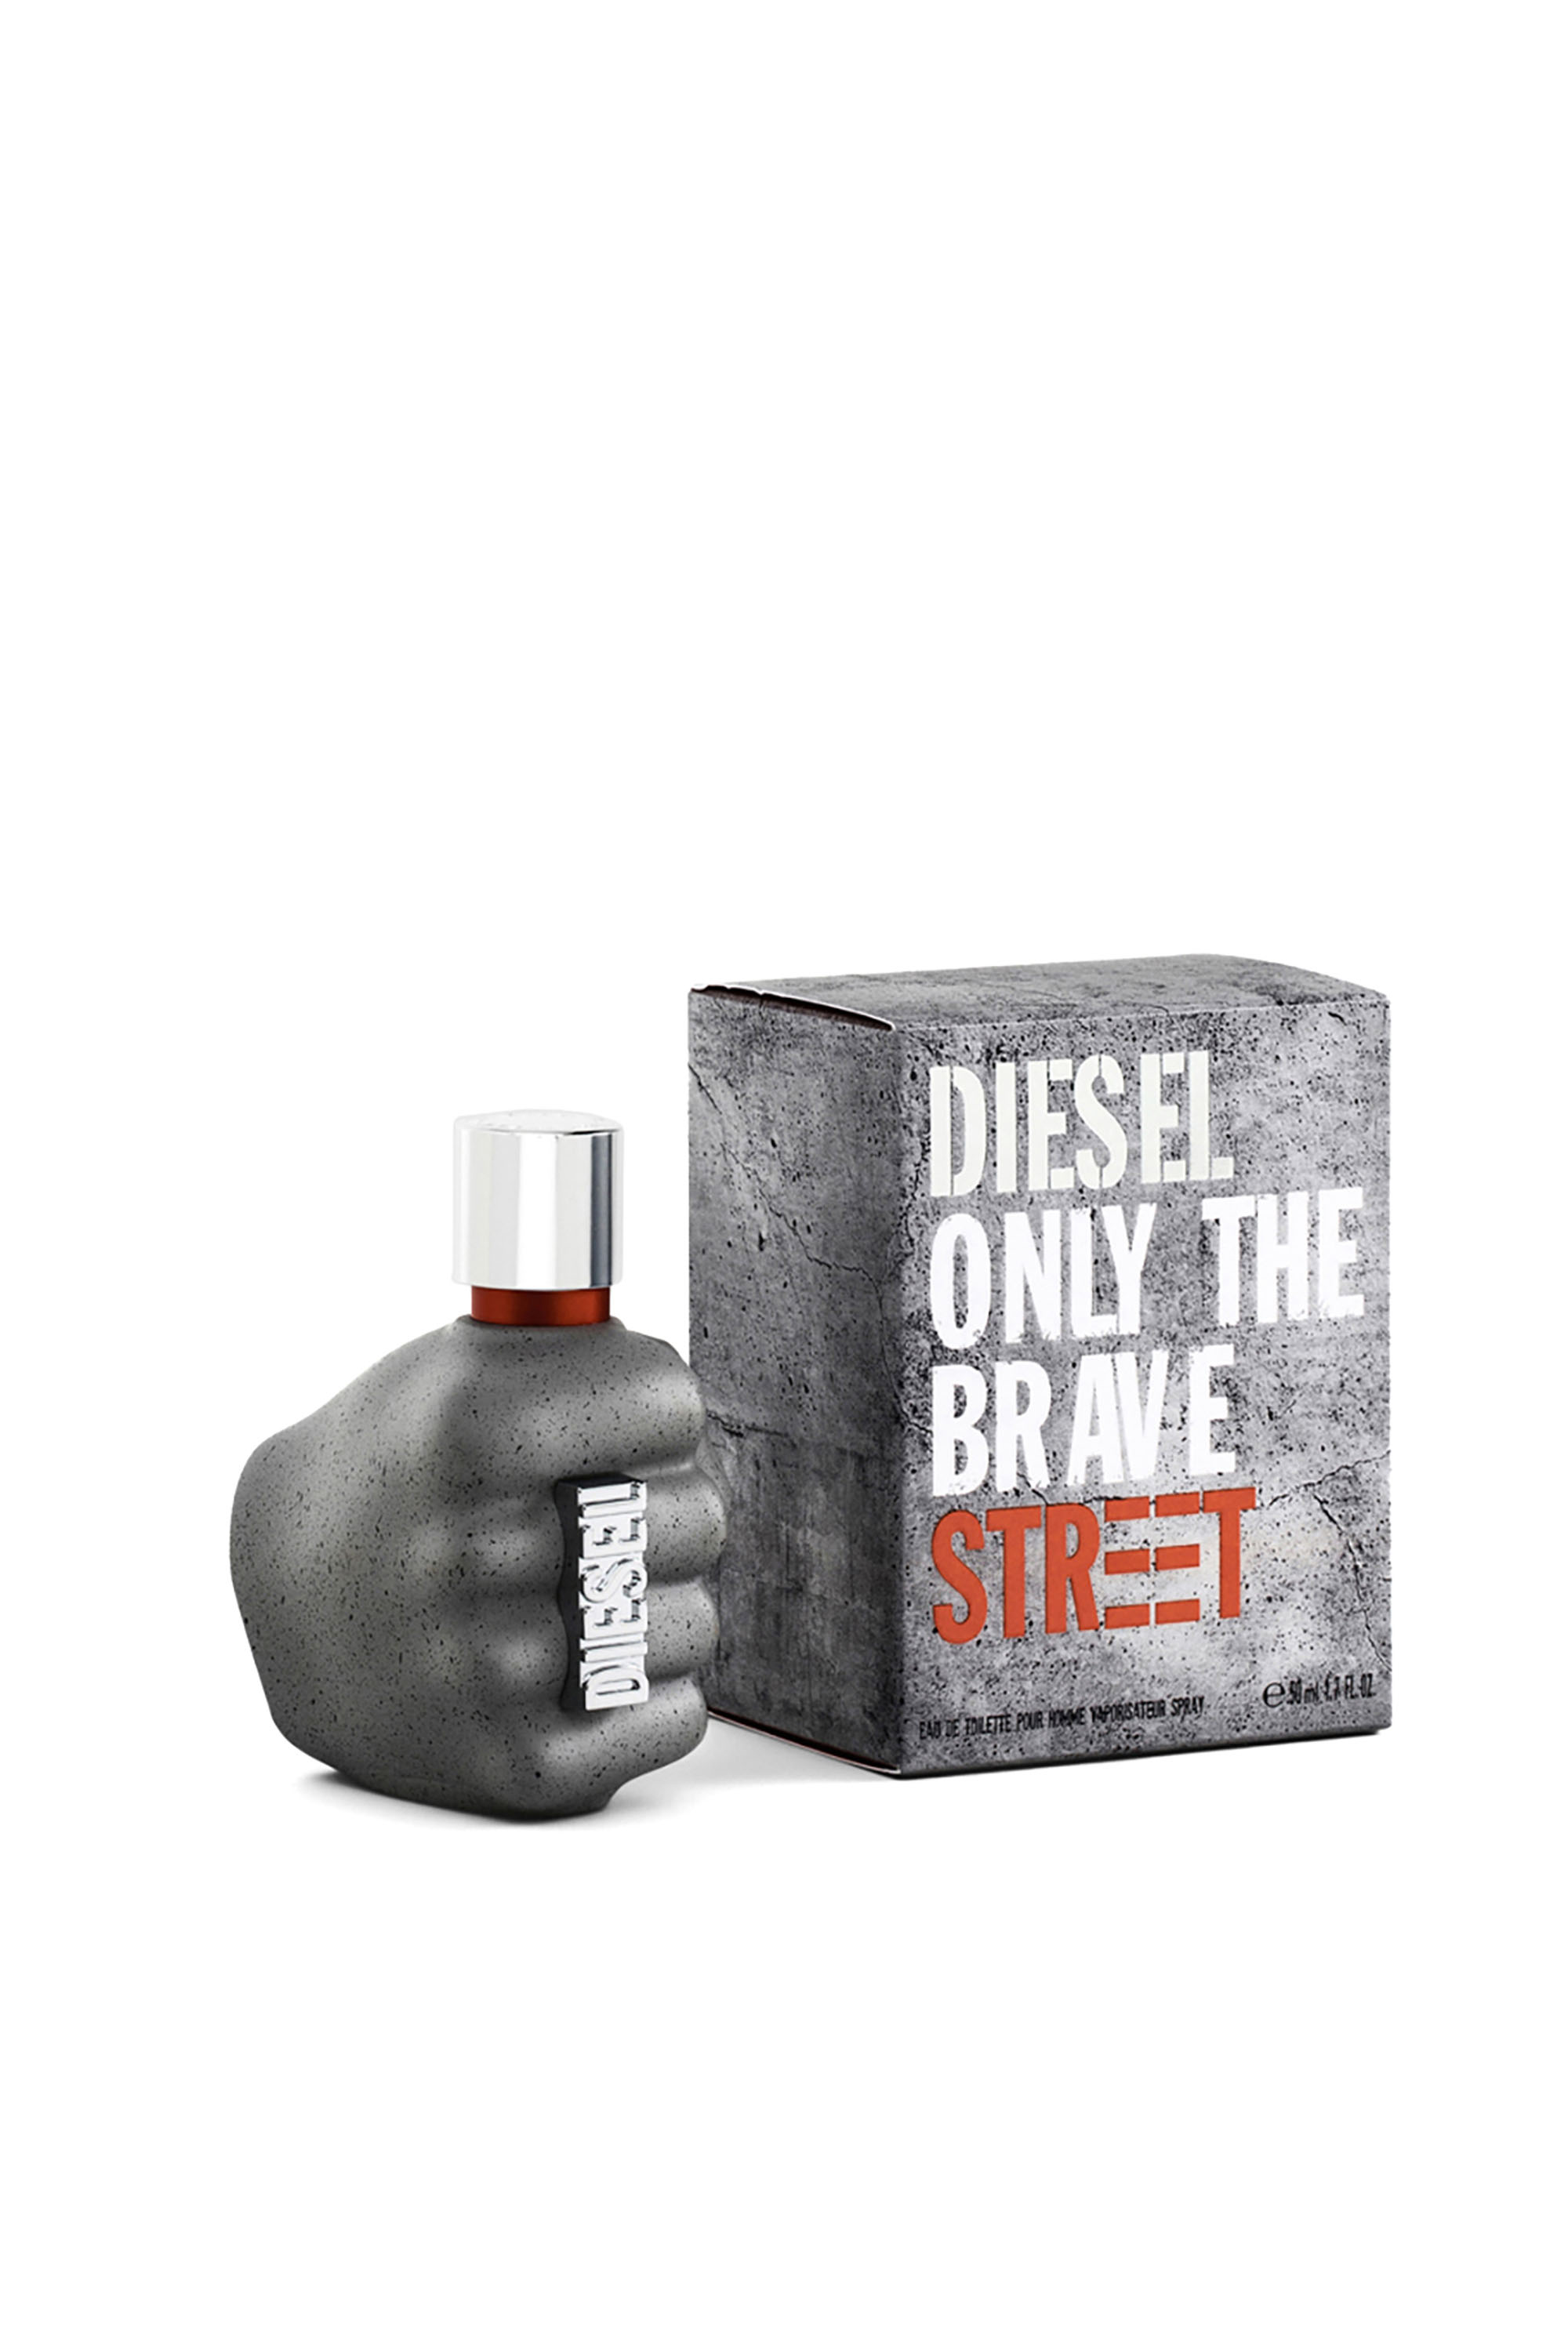 Diesel - ONLY THE BRAVE STREET 50ML, Grey - Image 2